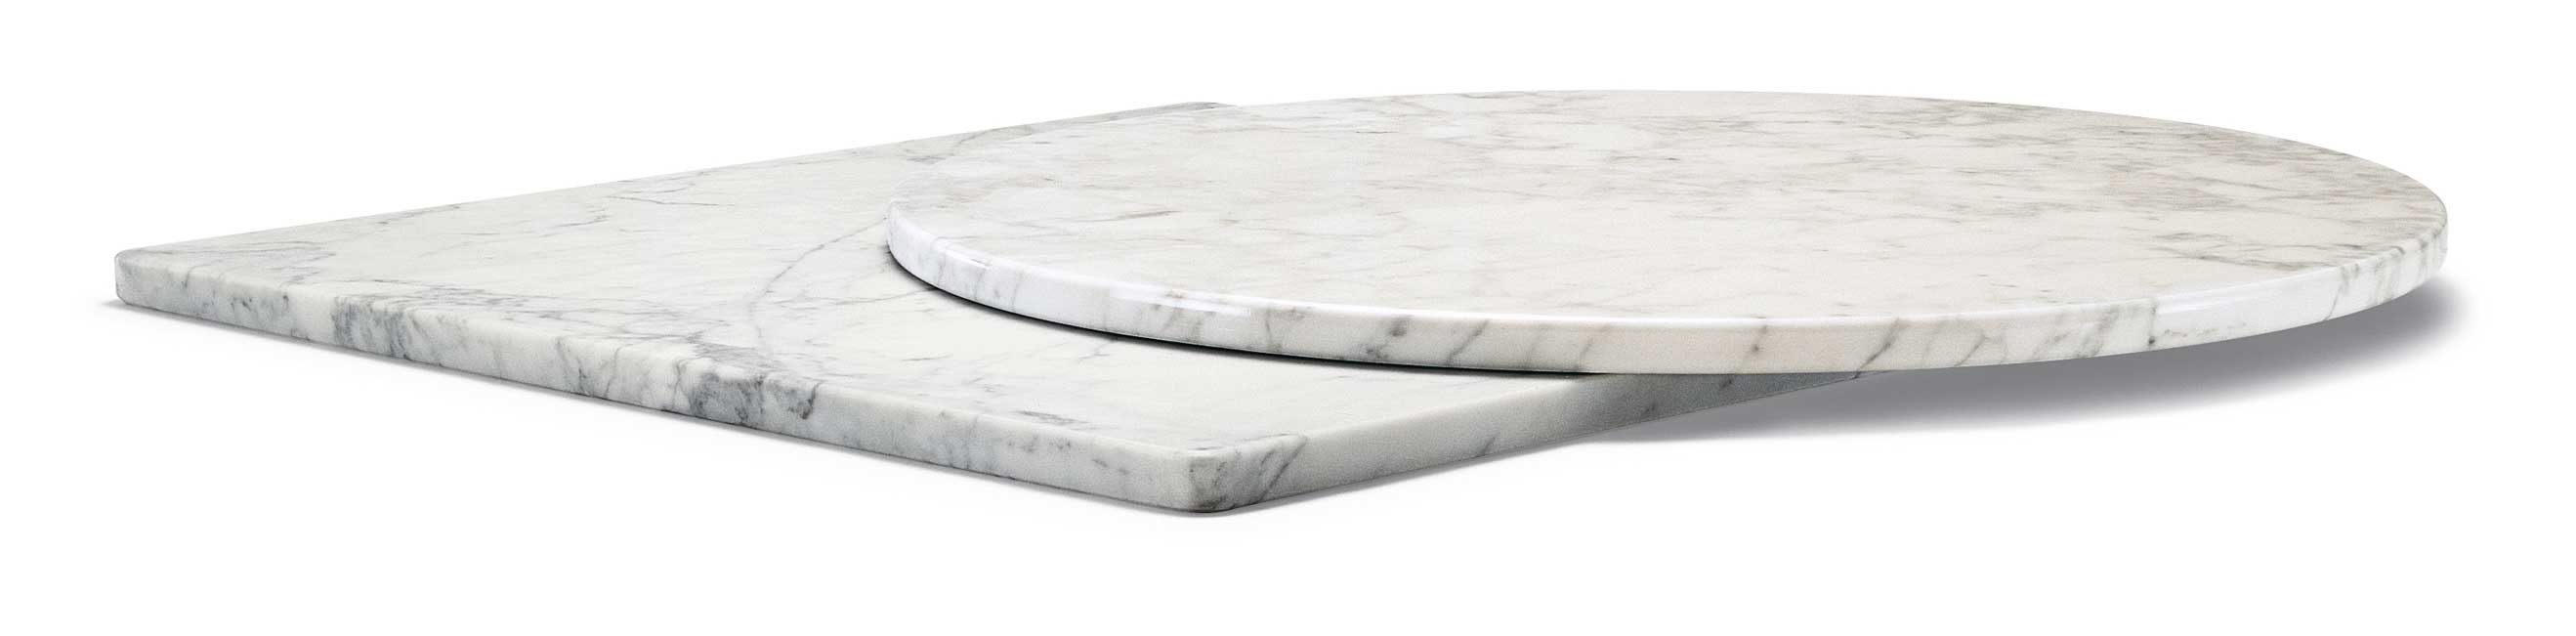 Bordsskiva i marmor Carrara tjocklek 20 mm rak kant dia 60 cm